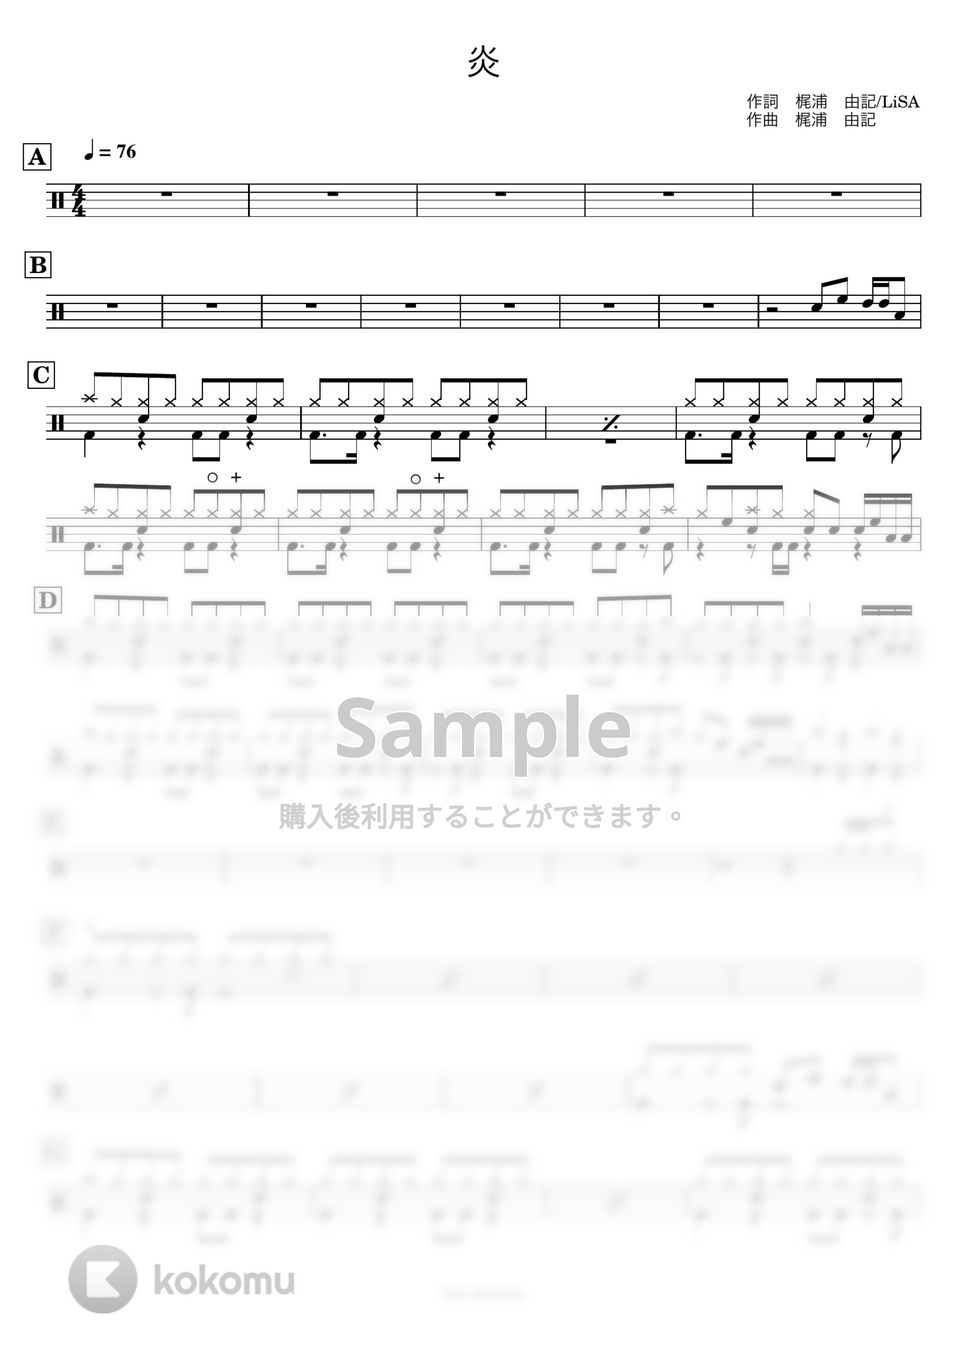 LiSA - 【ドラム譜】炎【初心者用アレンジ】 by Taiki Mizumoto